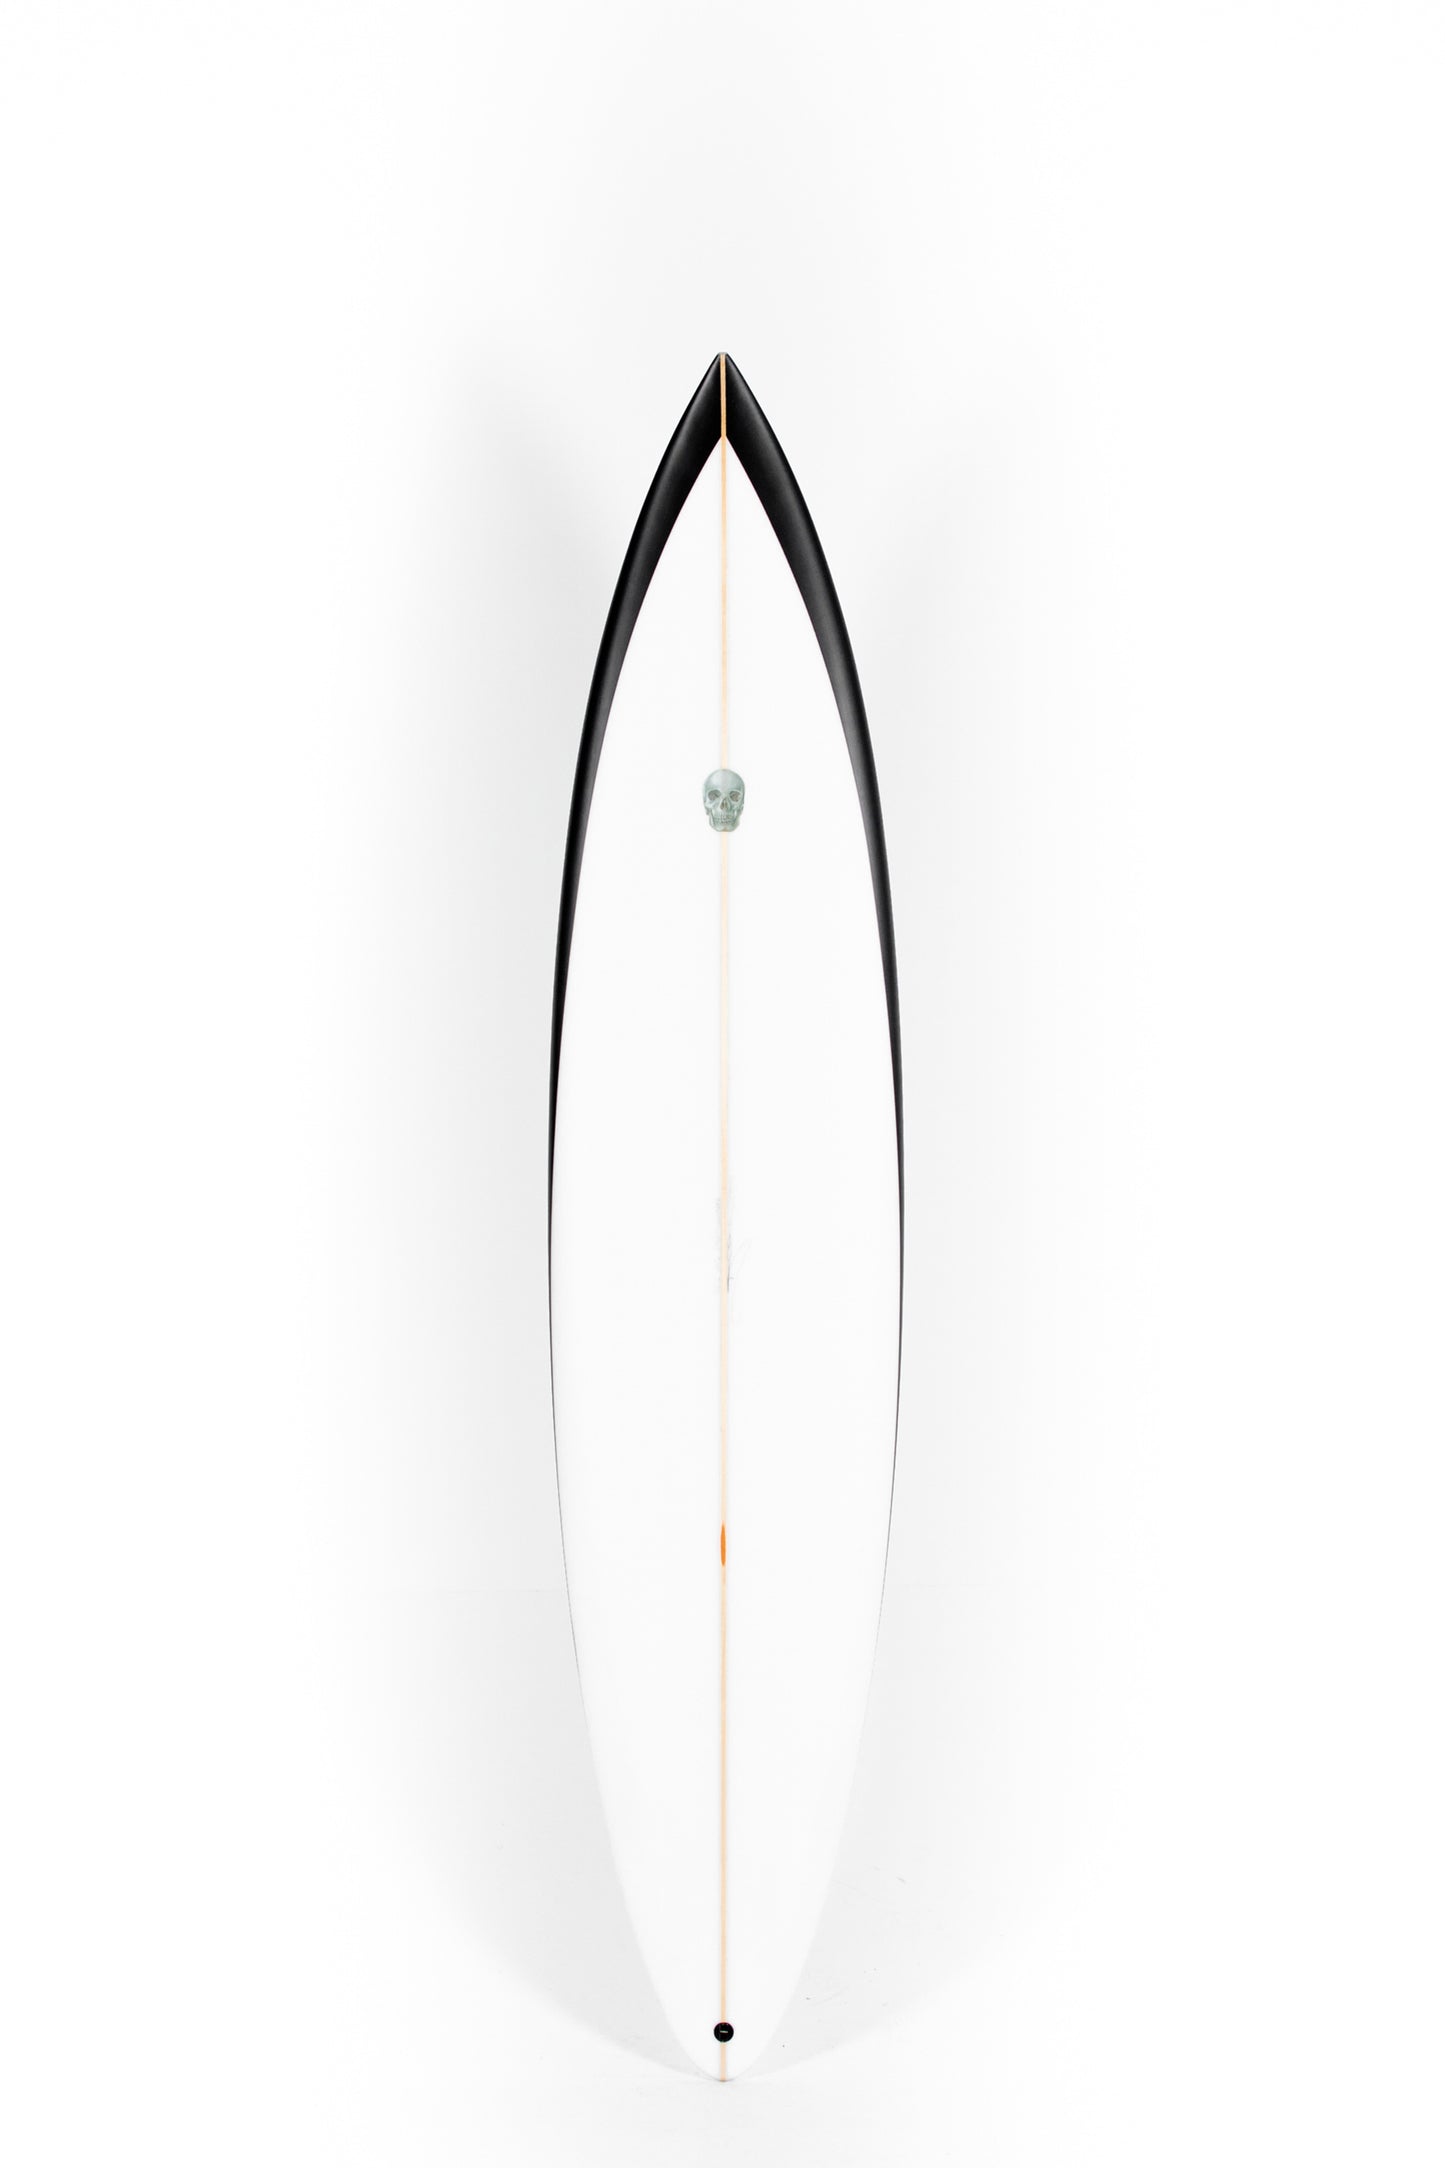 
                  
                    Christenson Surfboards - CARRERA - 7'6" x 19 x 2 3/4 - CX03418
                  
                